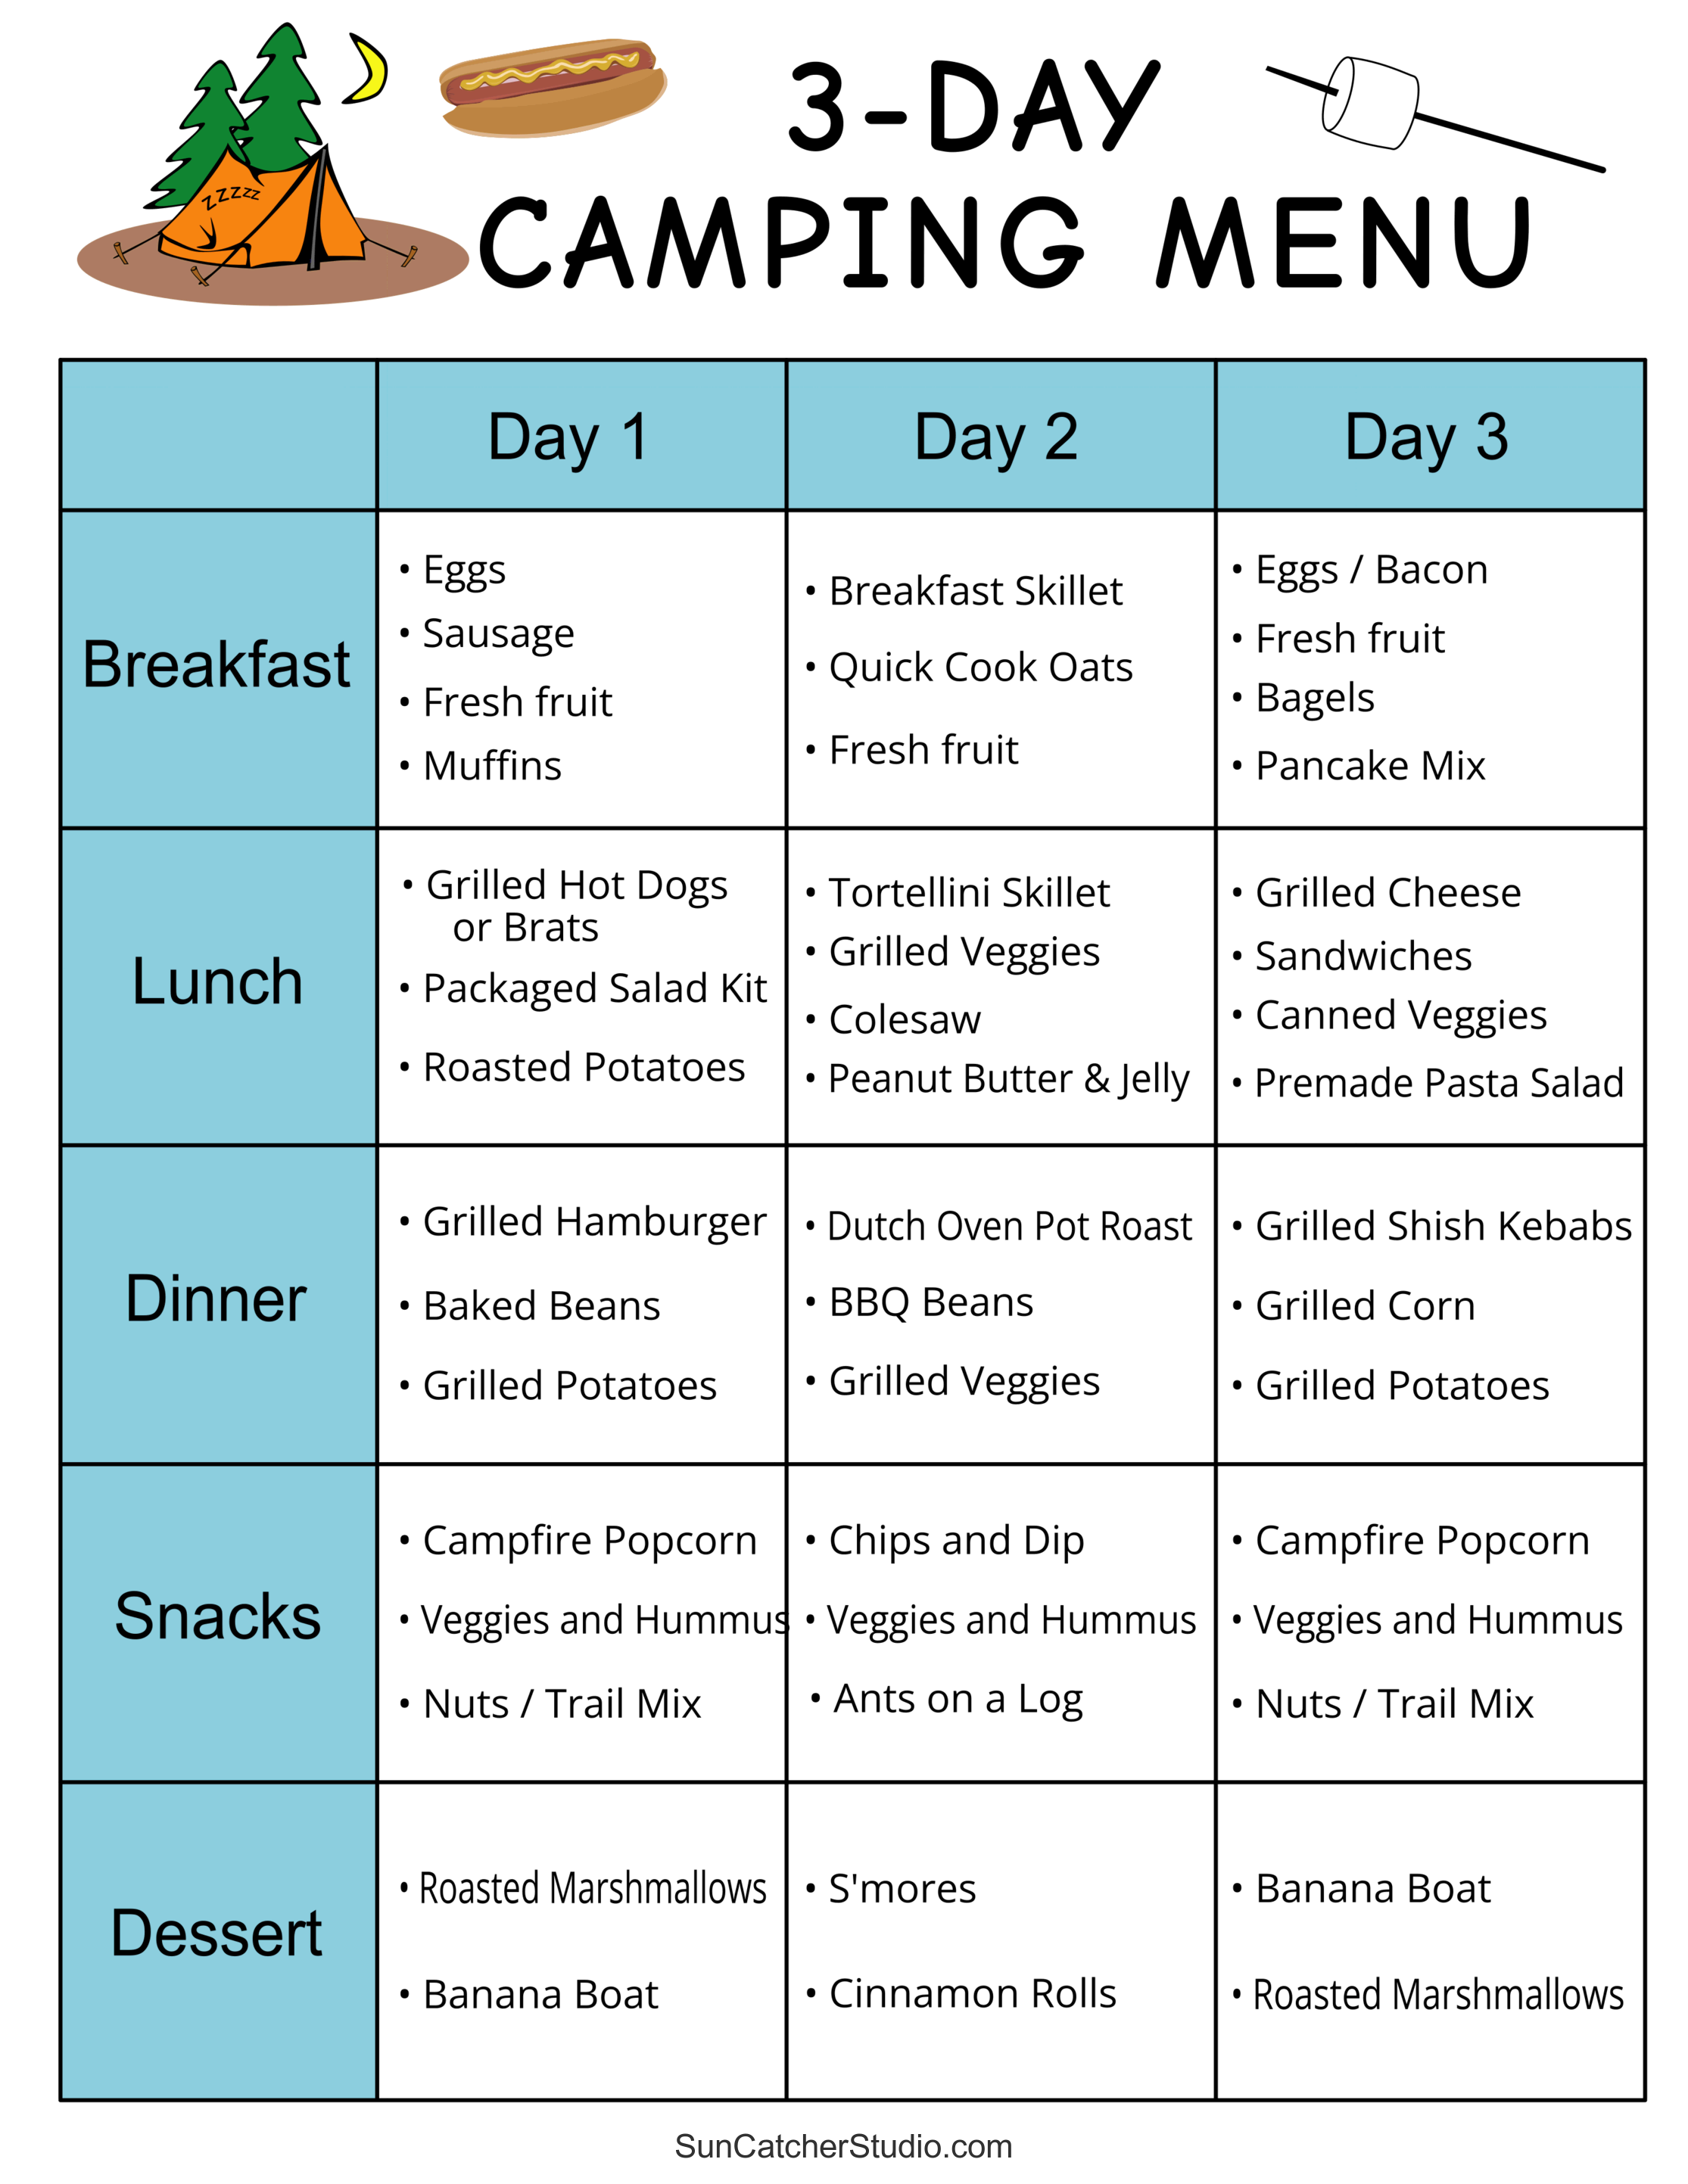 Organised camping checklists  Camping packing, Camping supplies